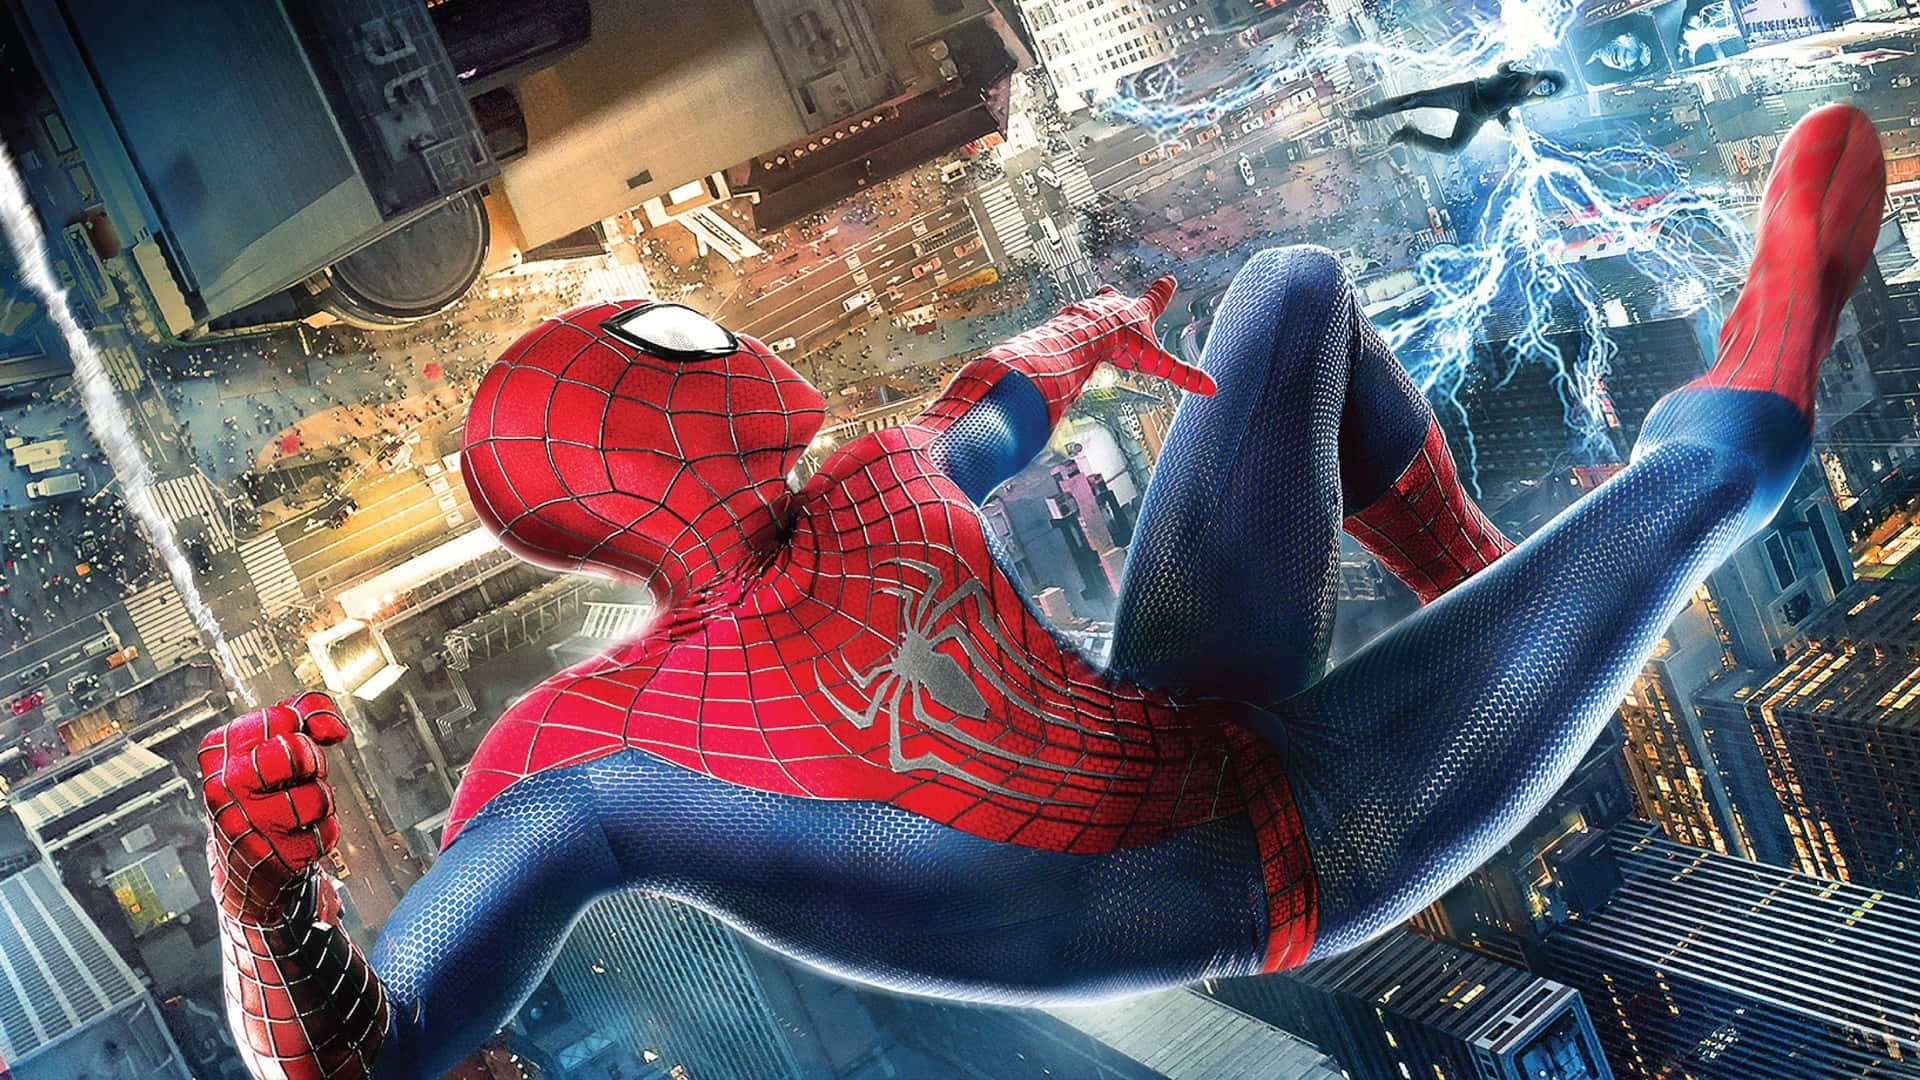 Spiderman 2 - Spiderman er tilbage for at redde dagen! Wallpaper